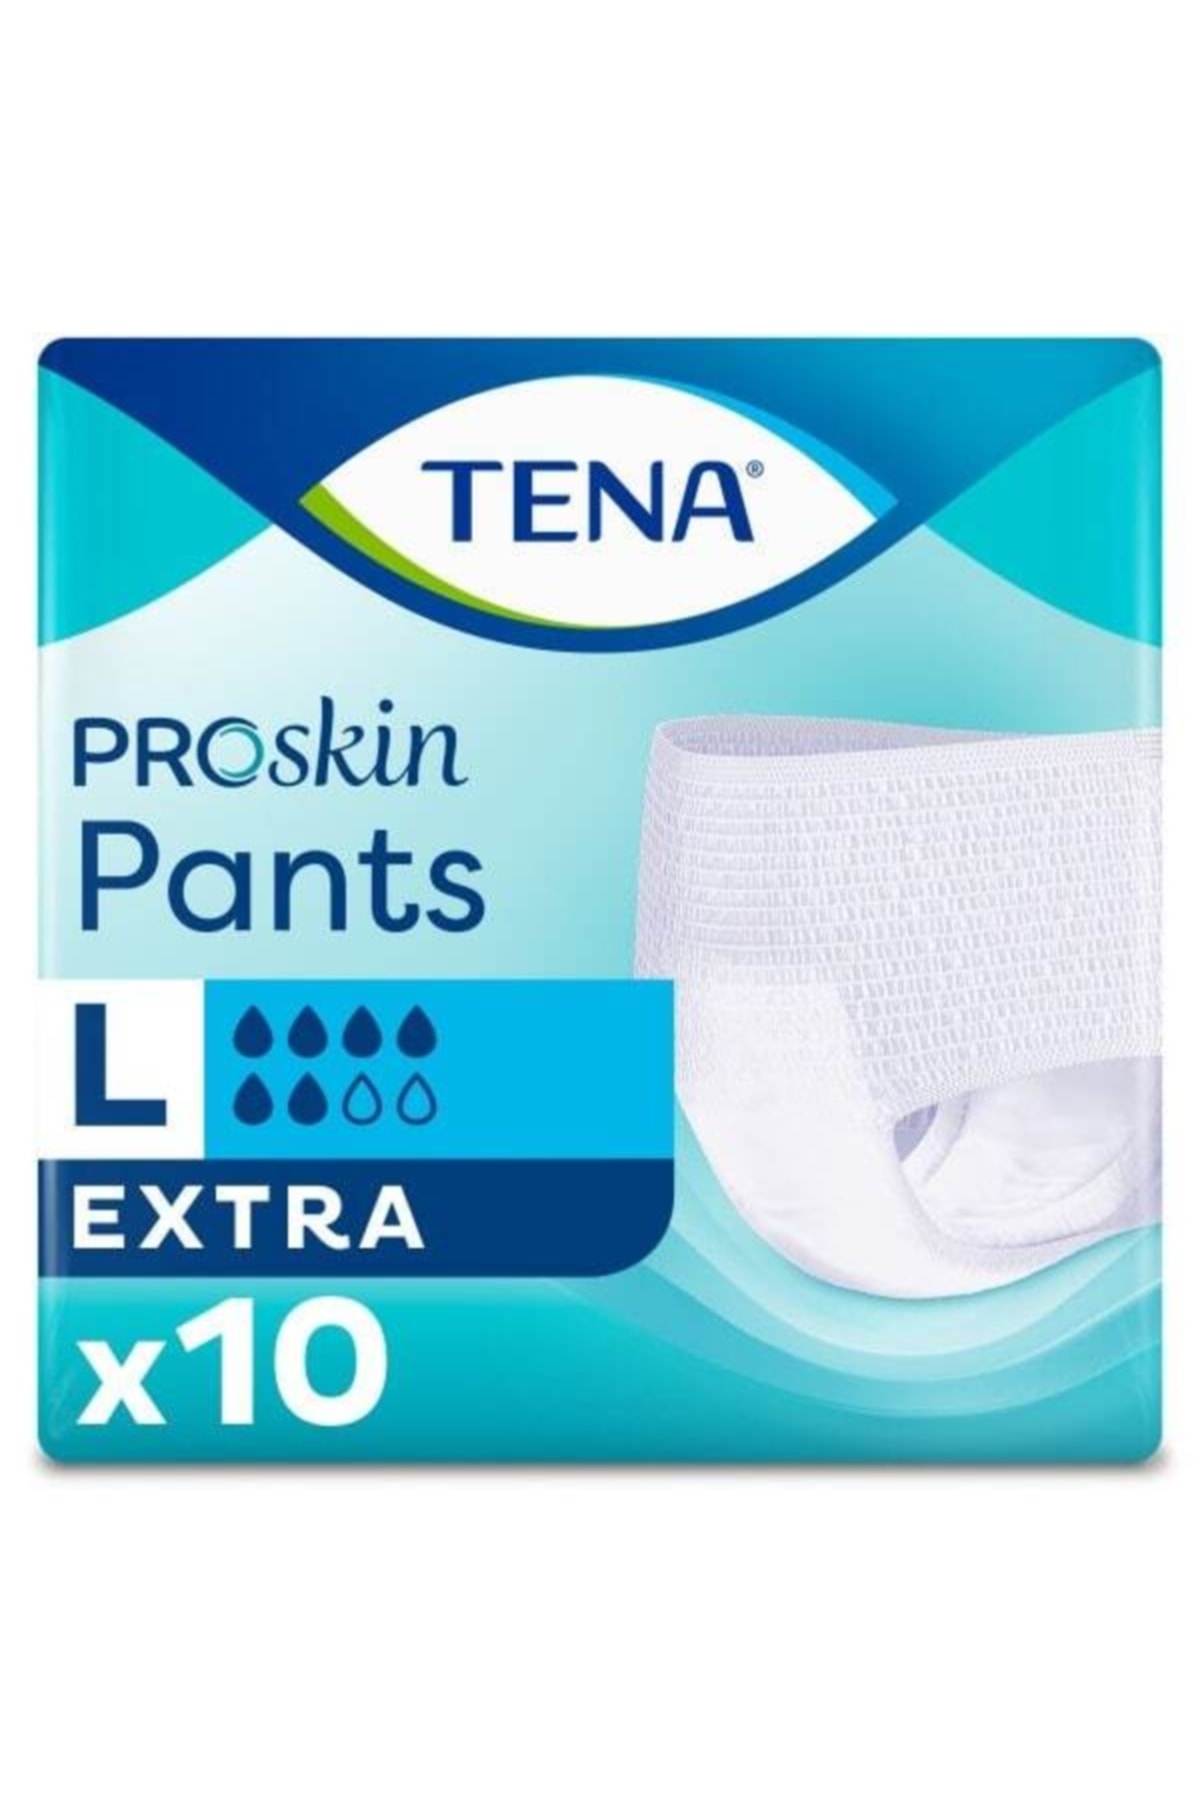 TENA Proskin Pants Extra Emici Külot Büyük Boy L 6 Damla 10'lu